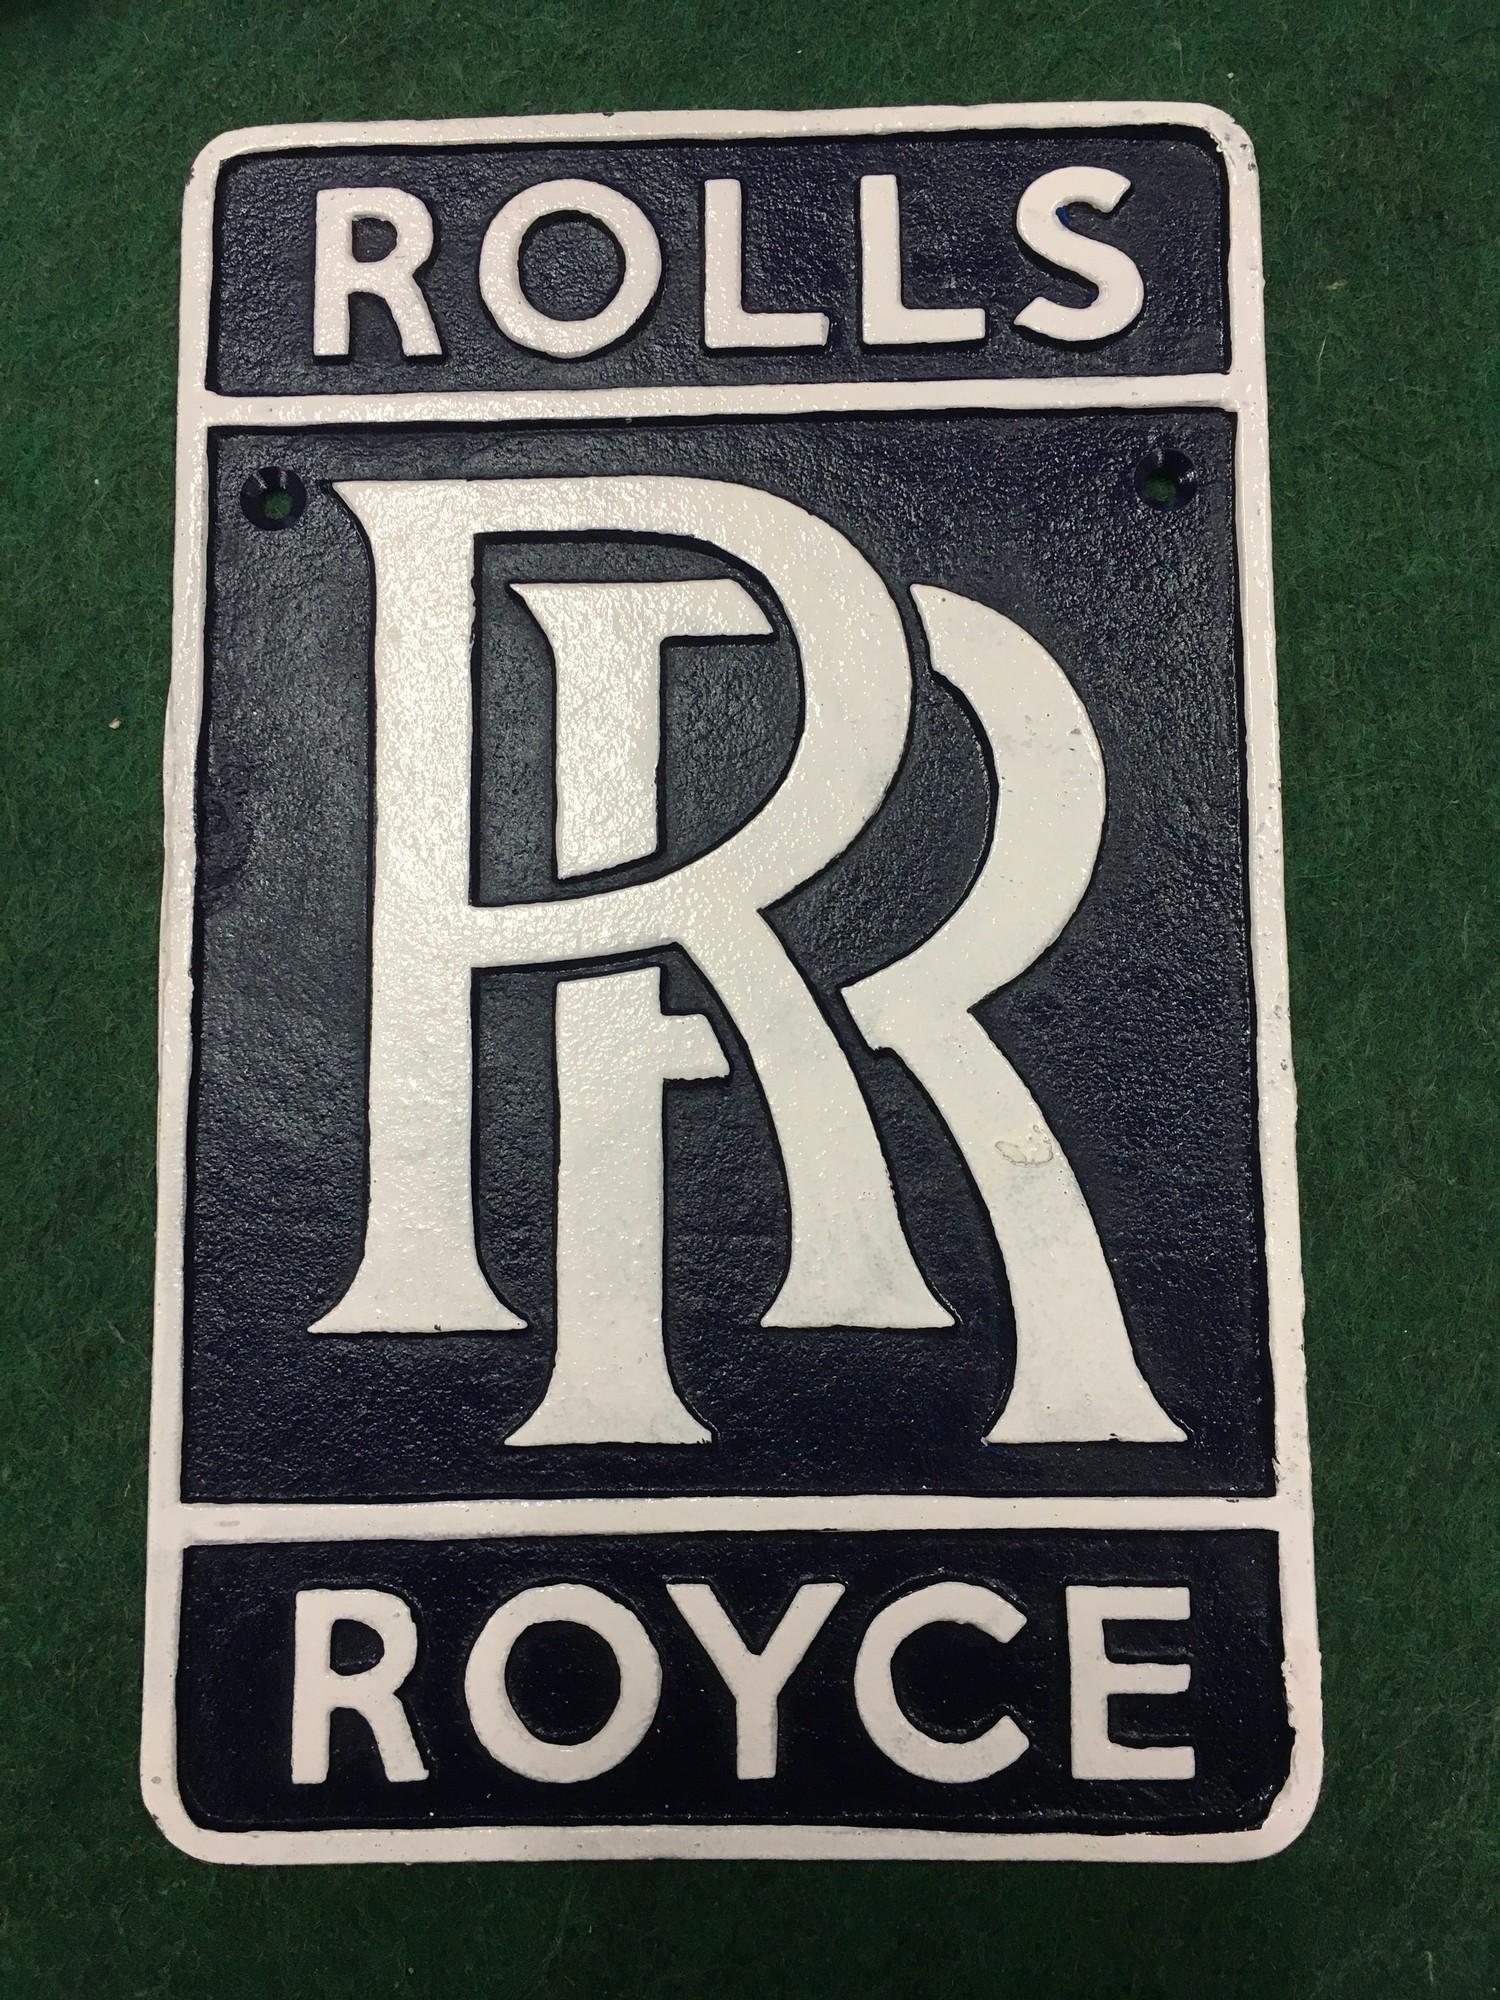 Rolls royce sign (ref 235)